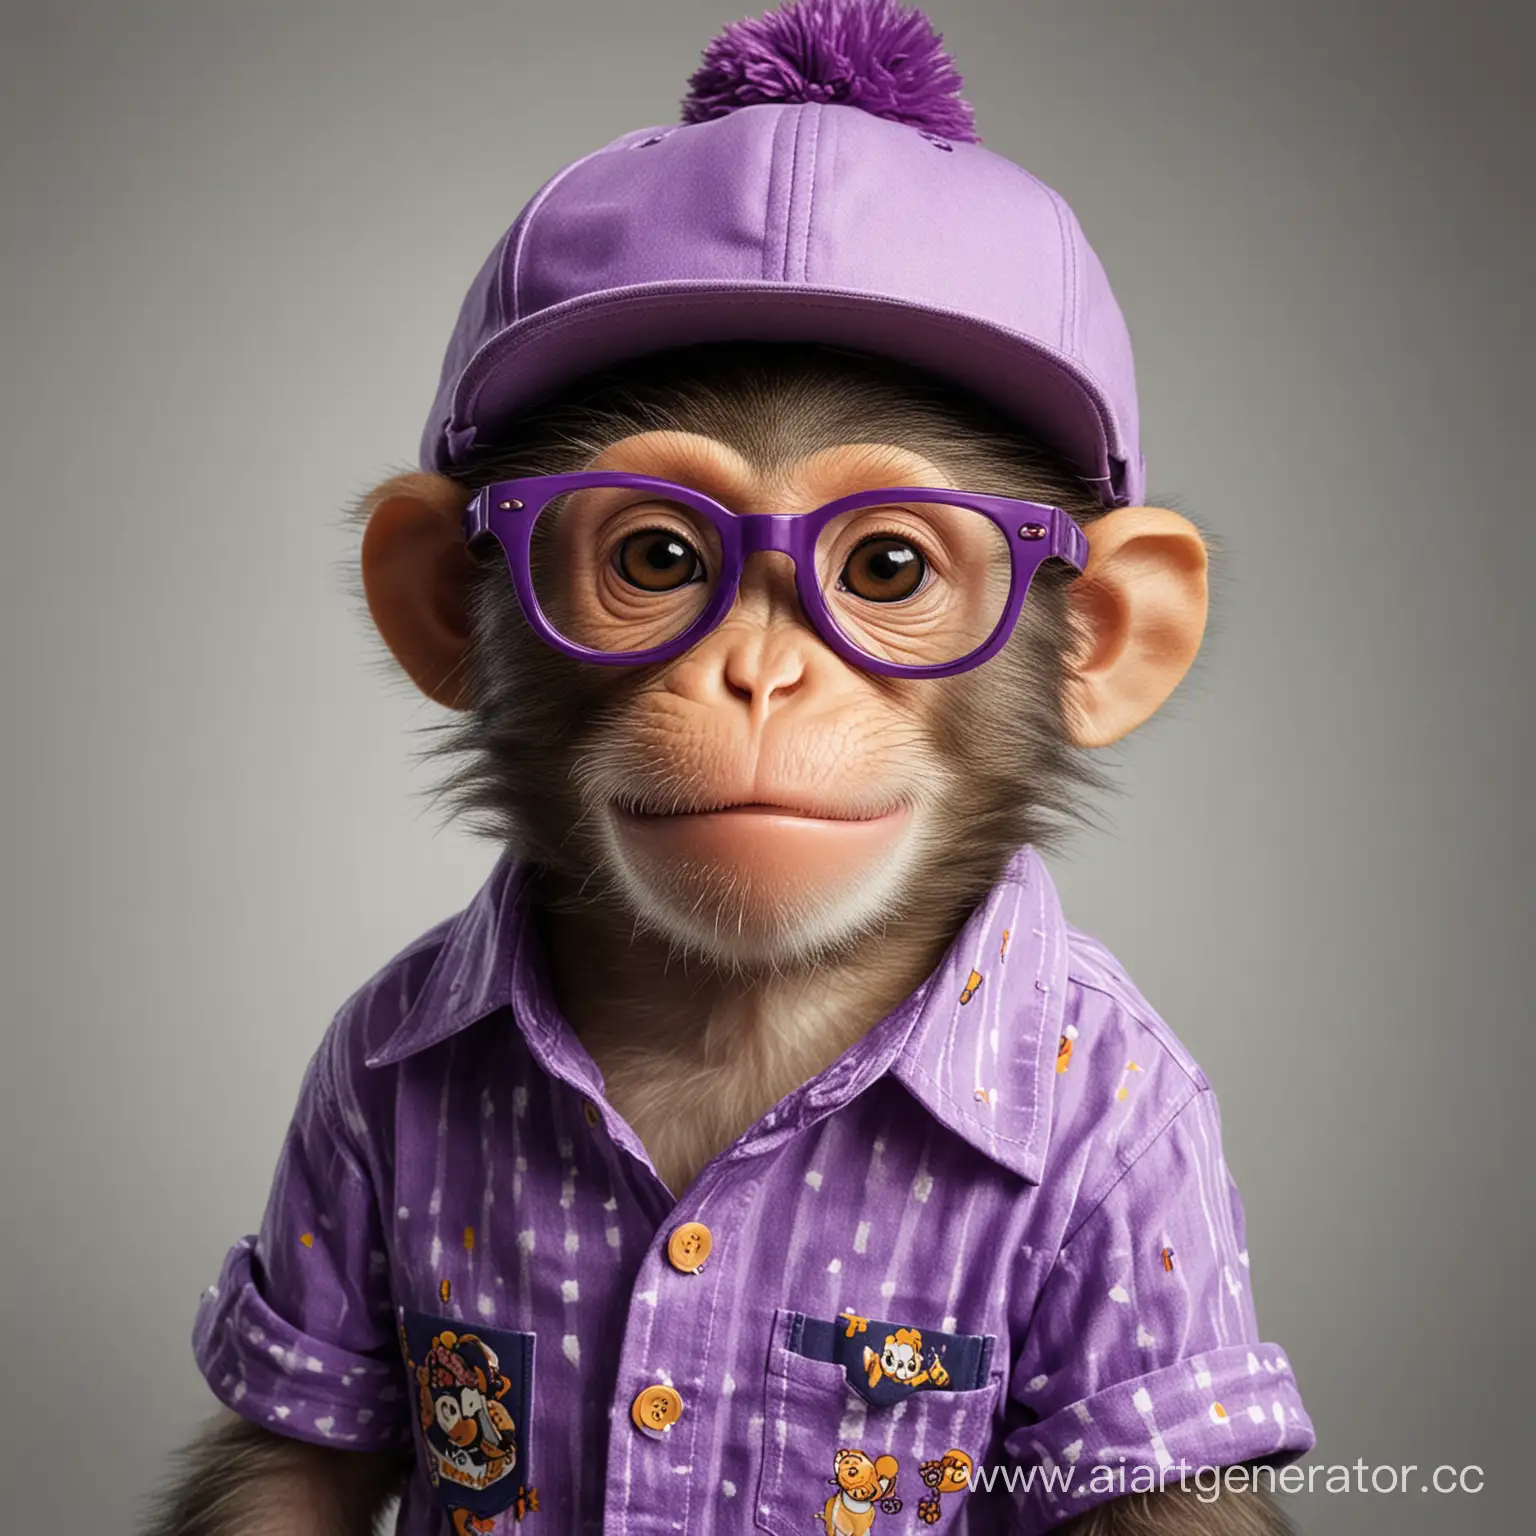 Cute-Monkey-Wearing-Purple-Cap-Glasses-and-Shirt